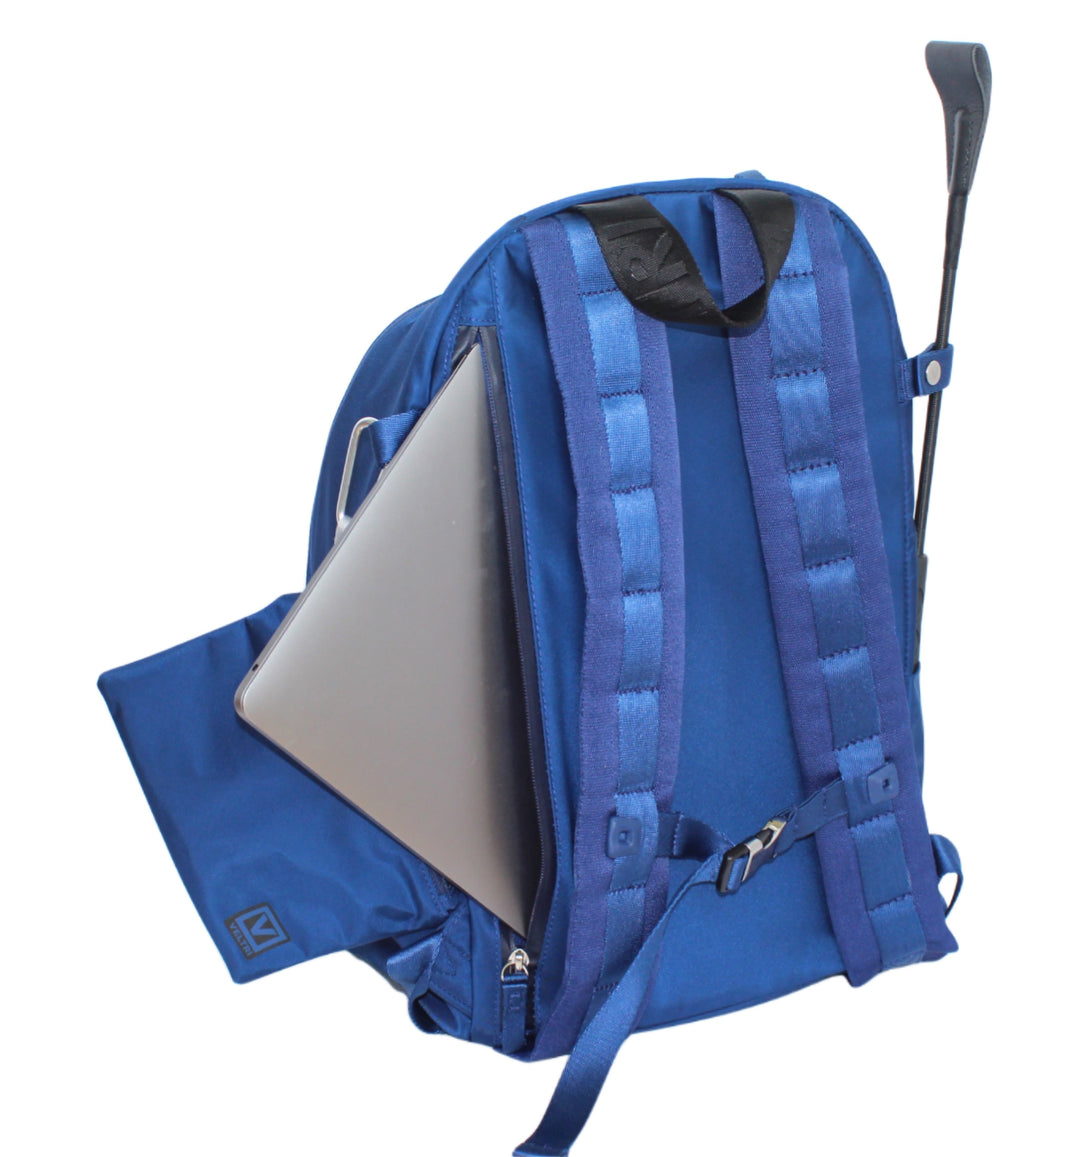 Veltri Sport Delaire Backpack - Bright Navy